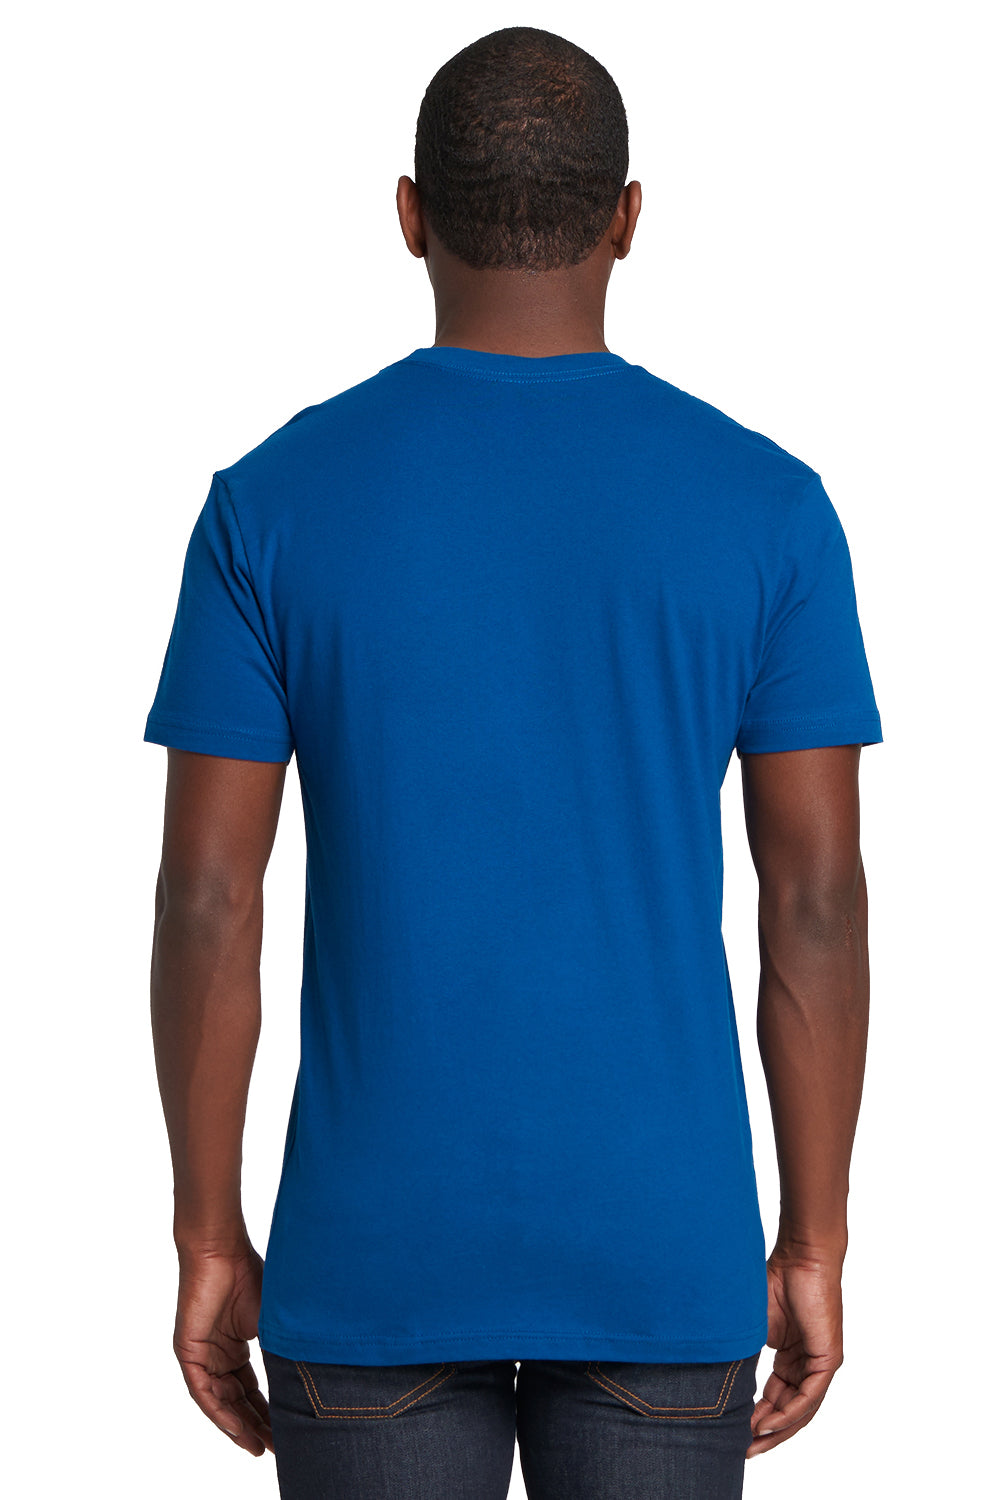 Next Level 3600 Mens Fine Jersey Short Sleeve Crewneck T-Shirt Cool Blue Back